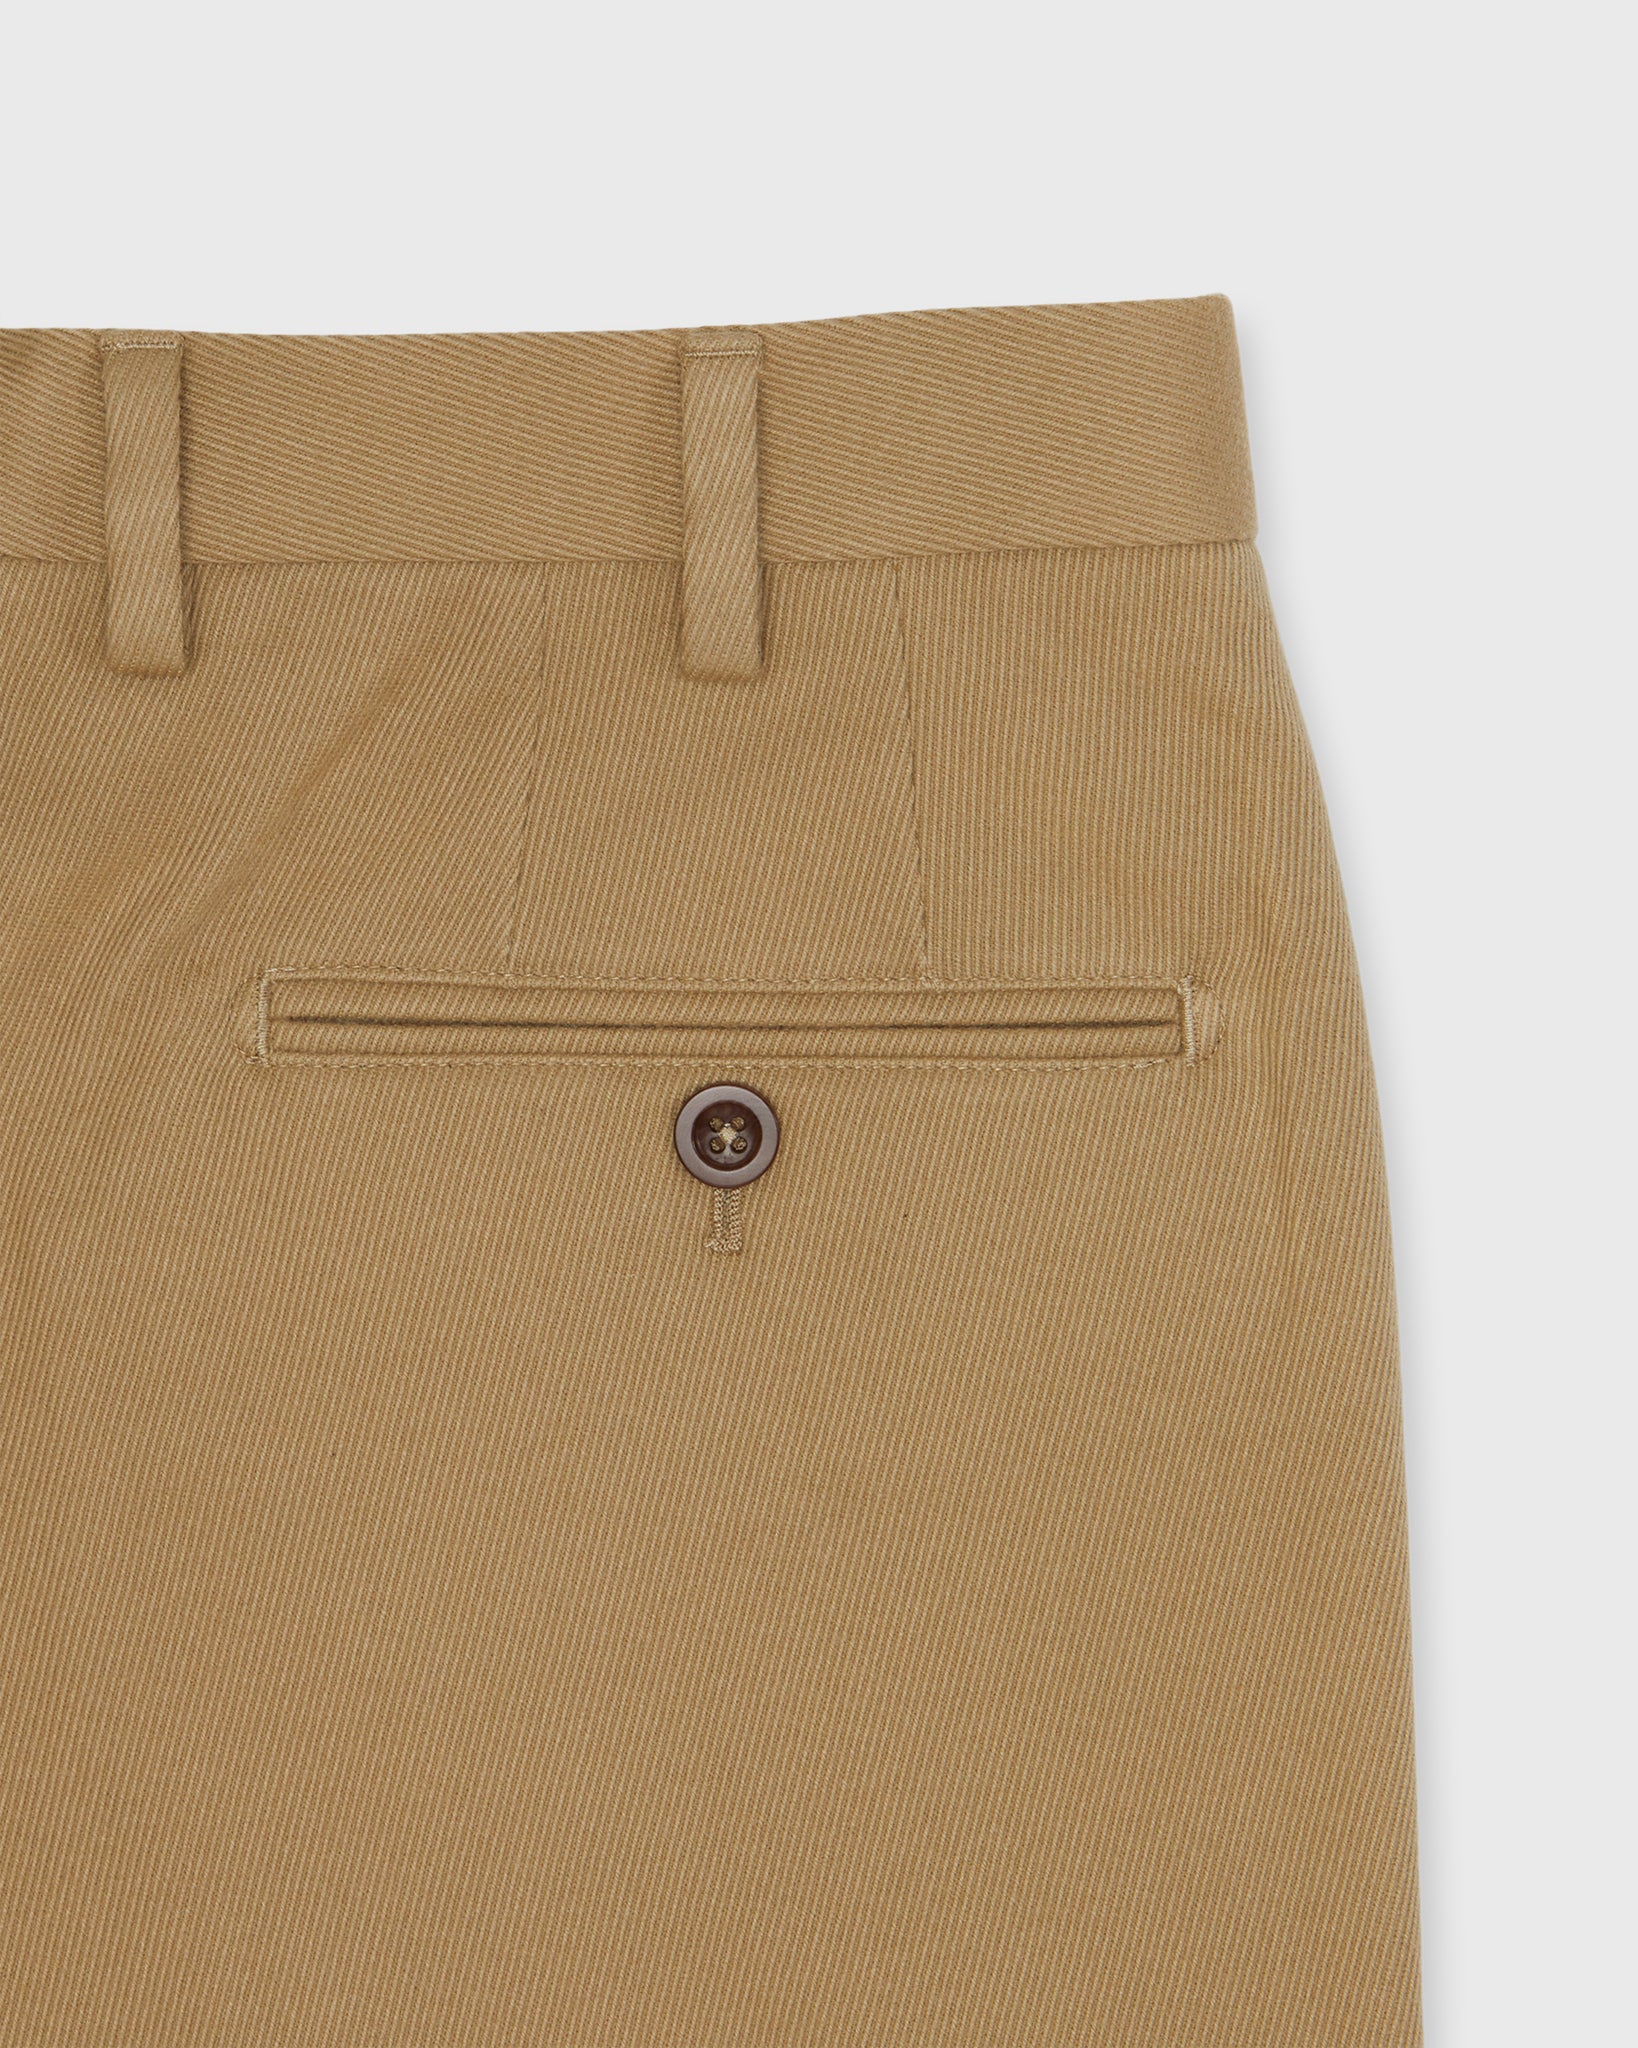 Sport Trouser in British Khaki Cotton/Cashmere Twill